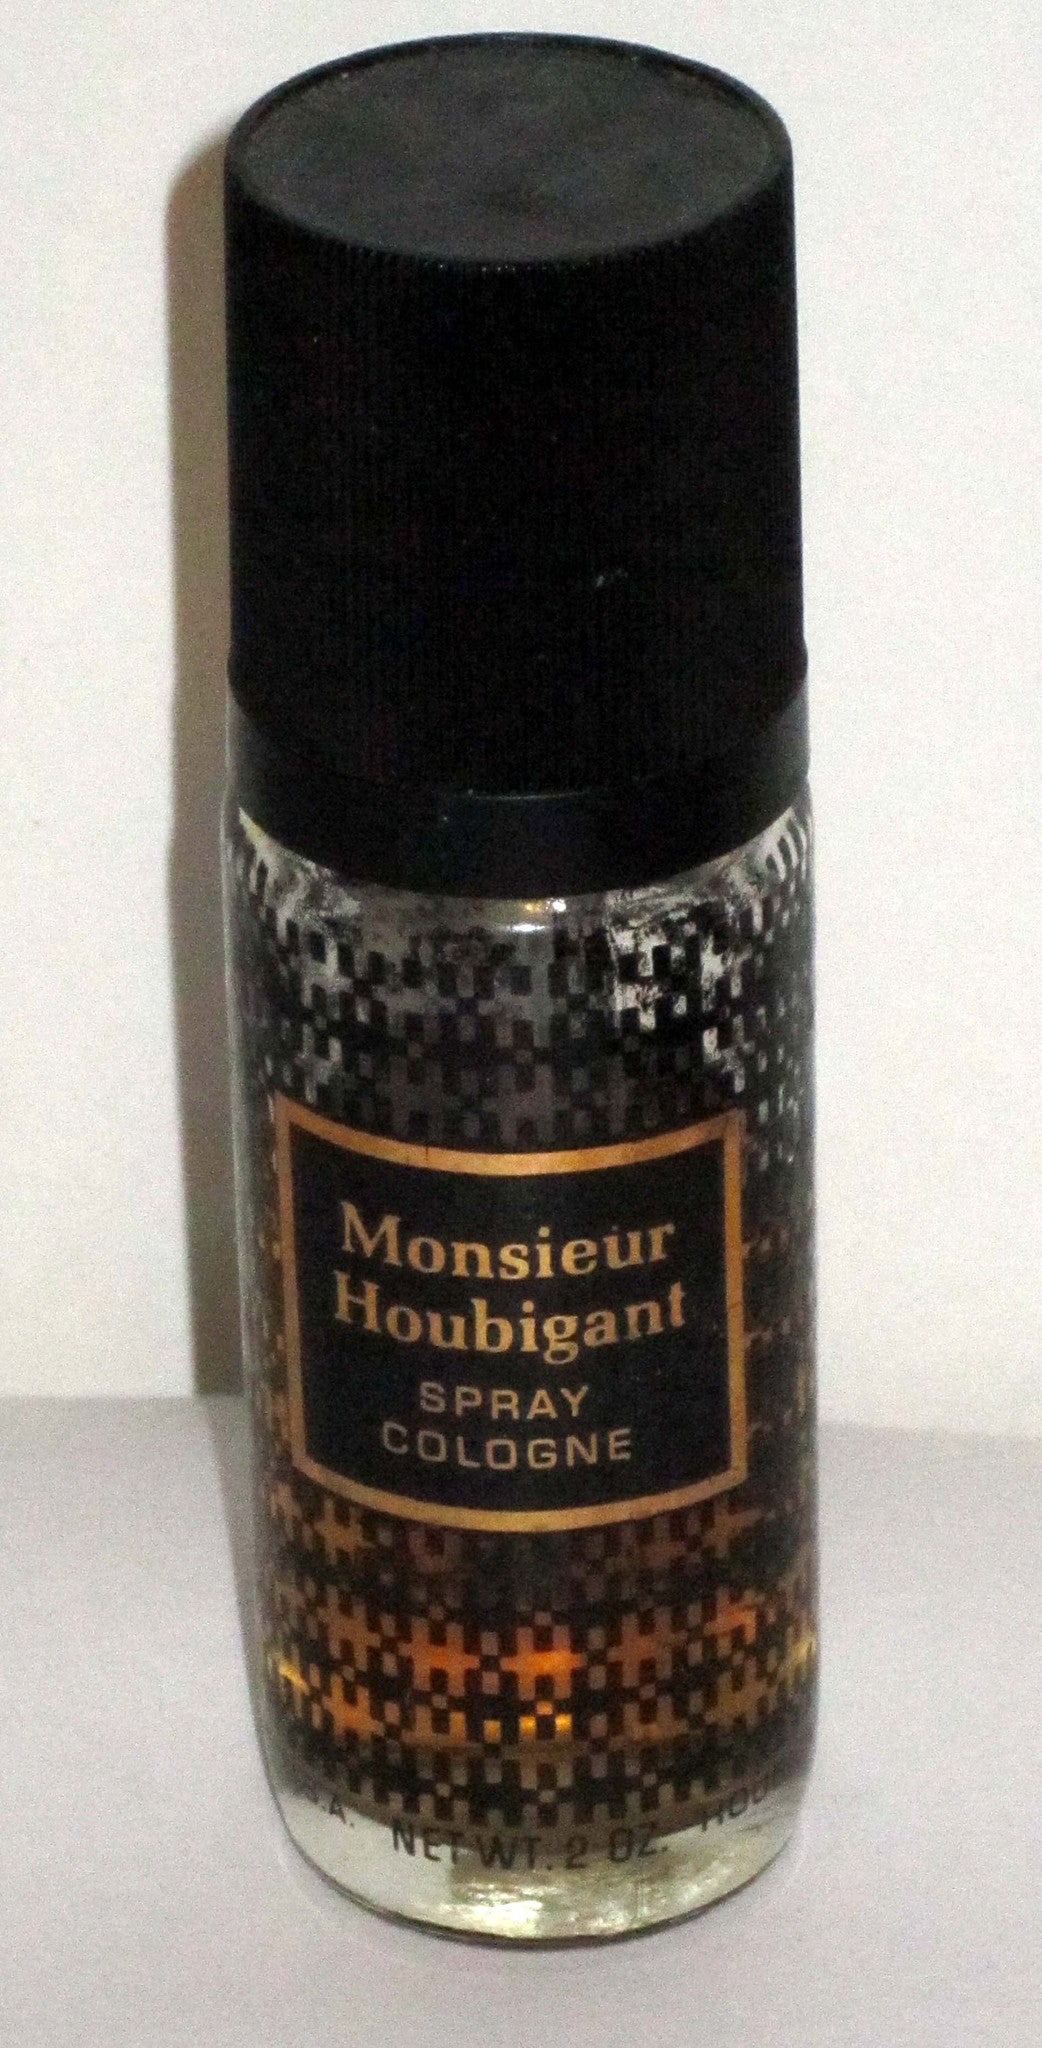 Monsieur Houbigant Spray Cologne